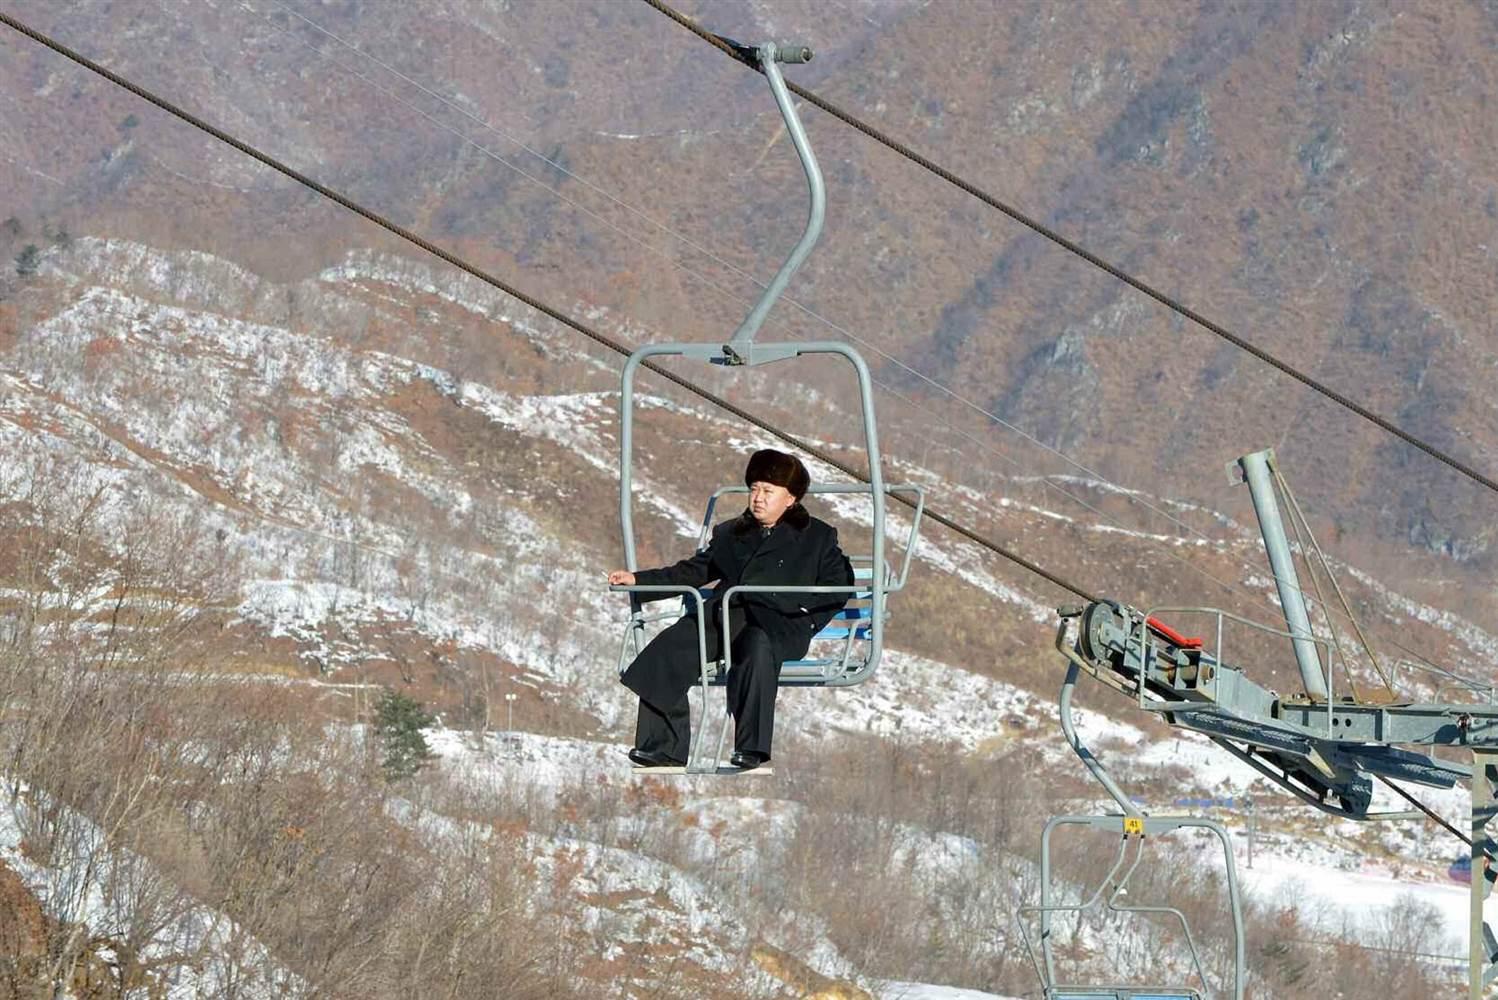 Kim Jong Un riding a ski lift&nbsp;